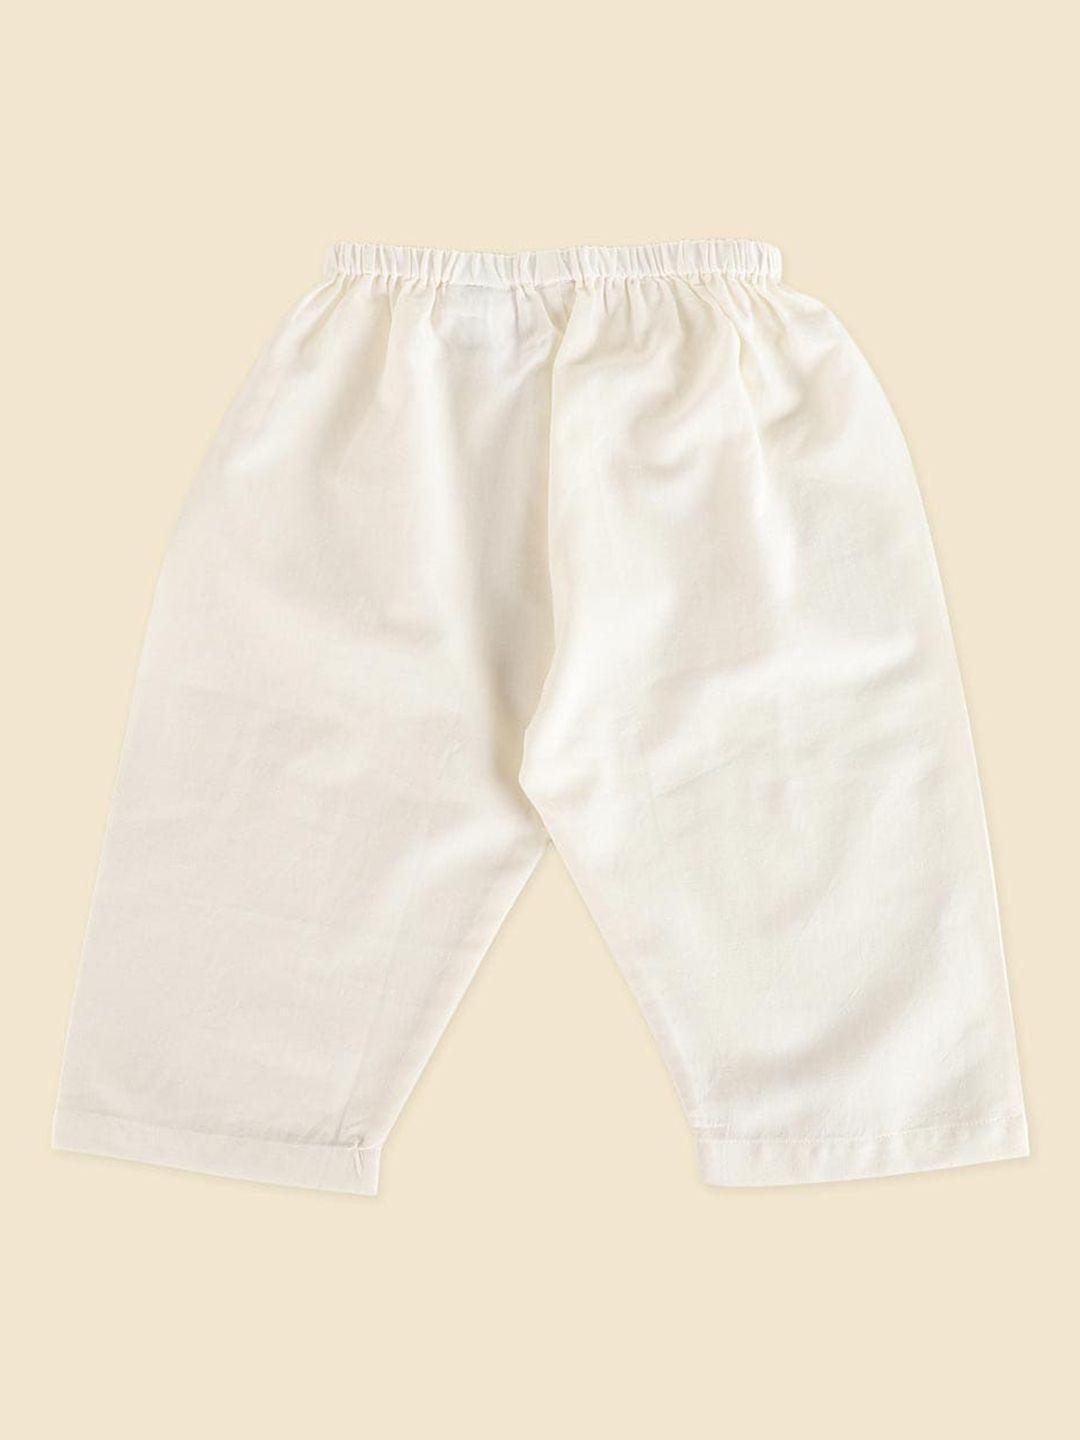 fabindia-infant-boys-mid-rise-cotton-pyjamas